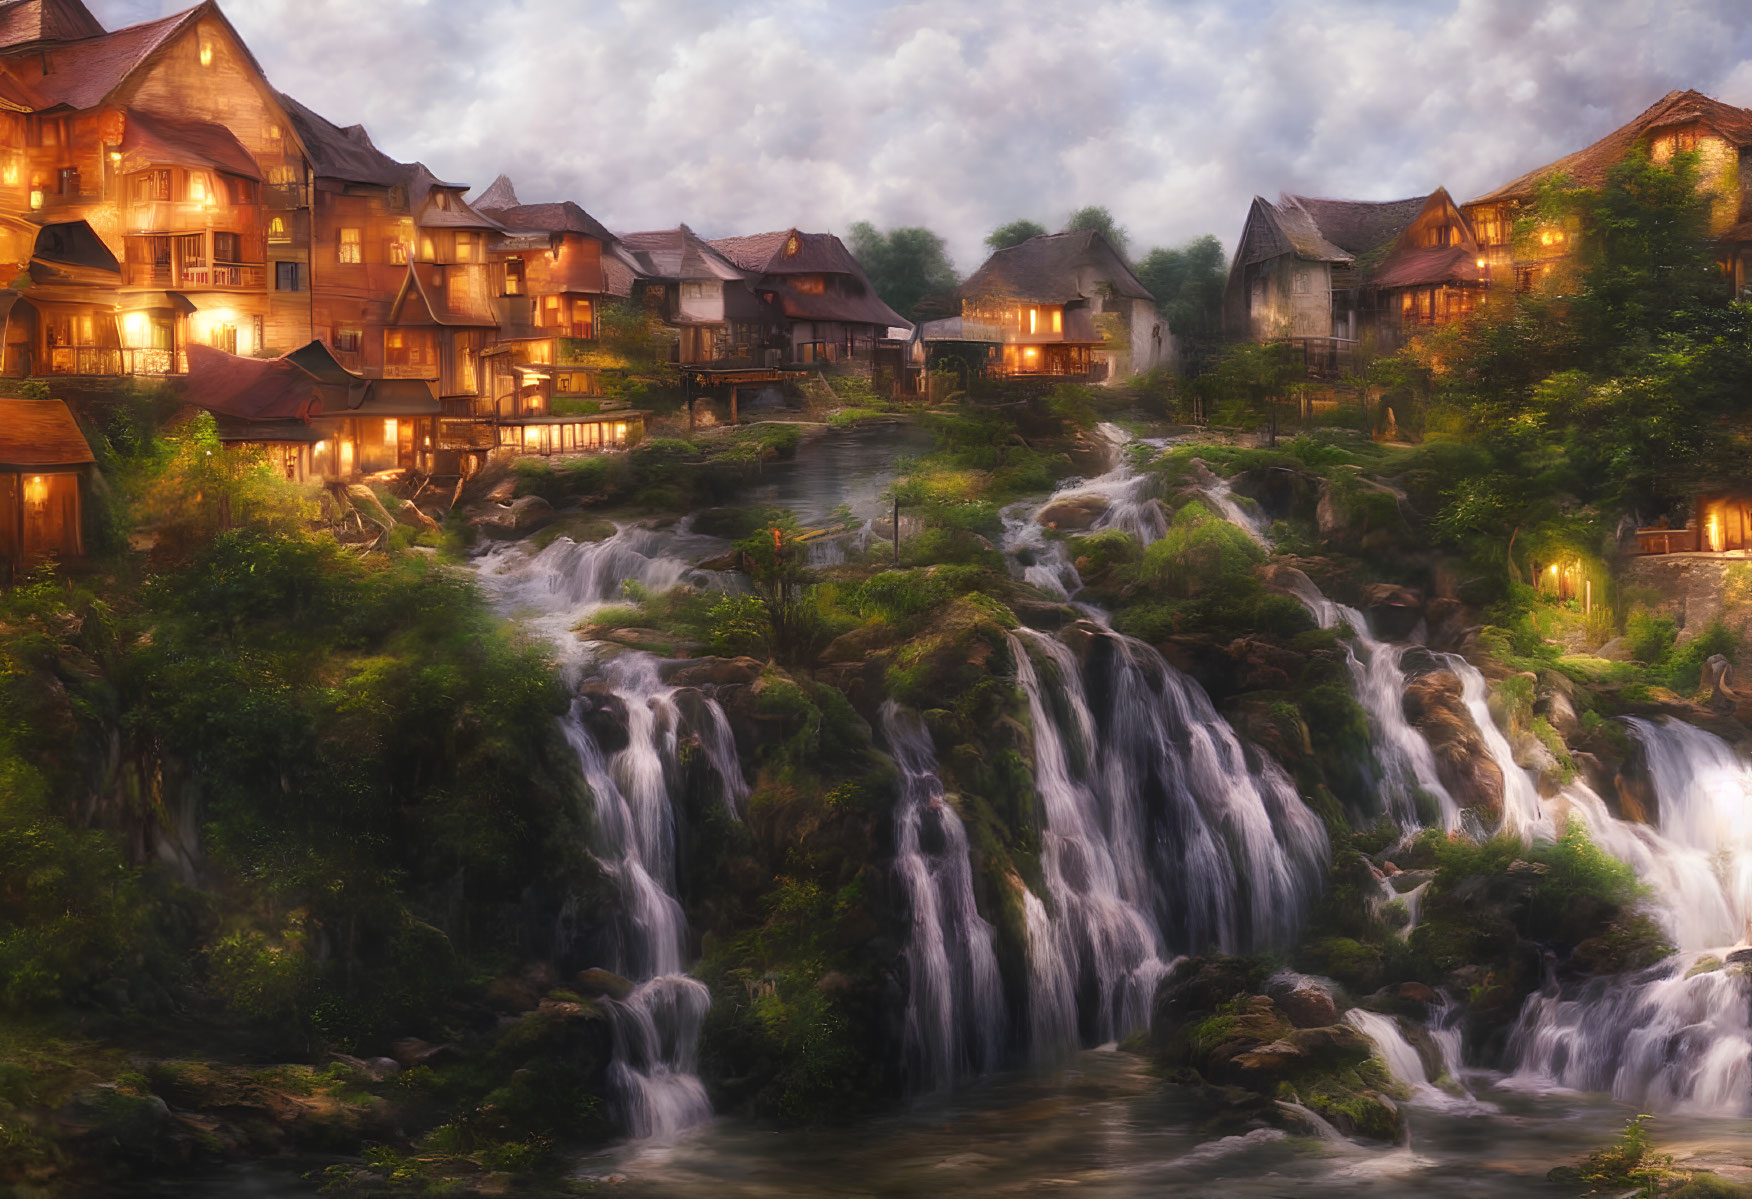 Scenic village with illuminated houses on waterfalls at twilight